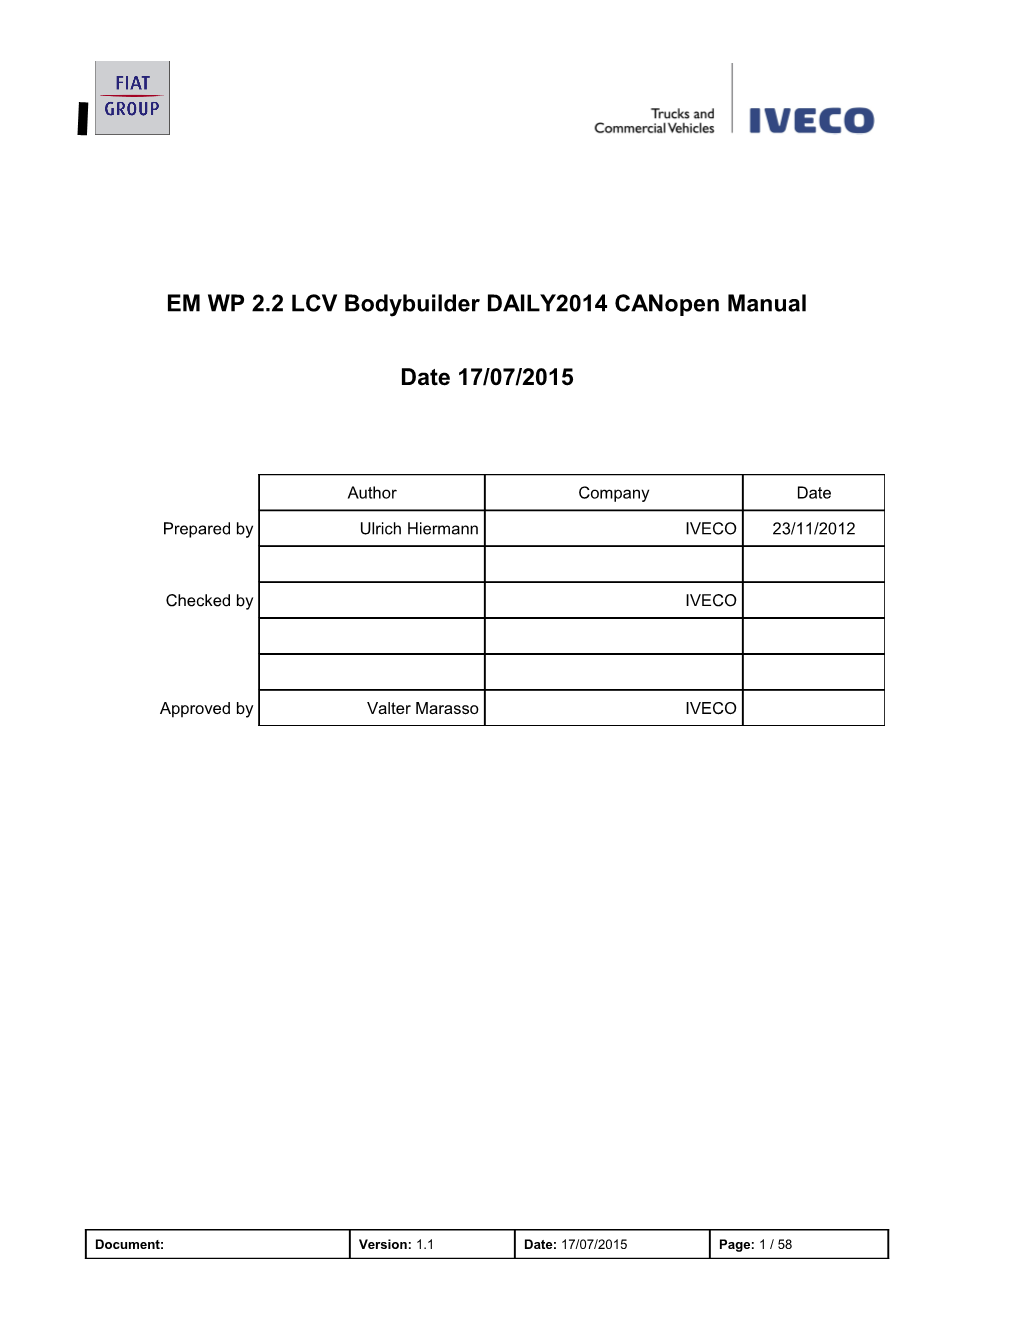 EM WP 2.2 LCV Bodybuilder DAILY2014 Canopen Manual